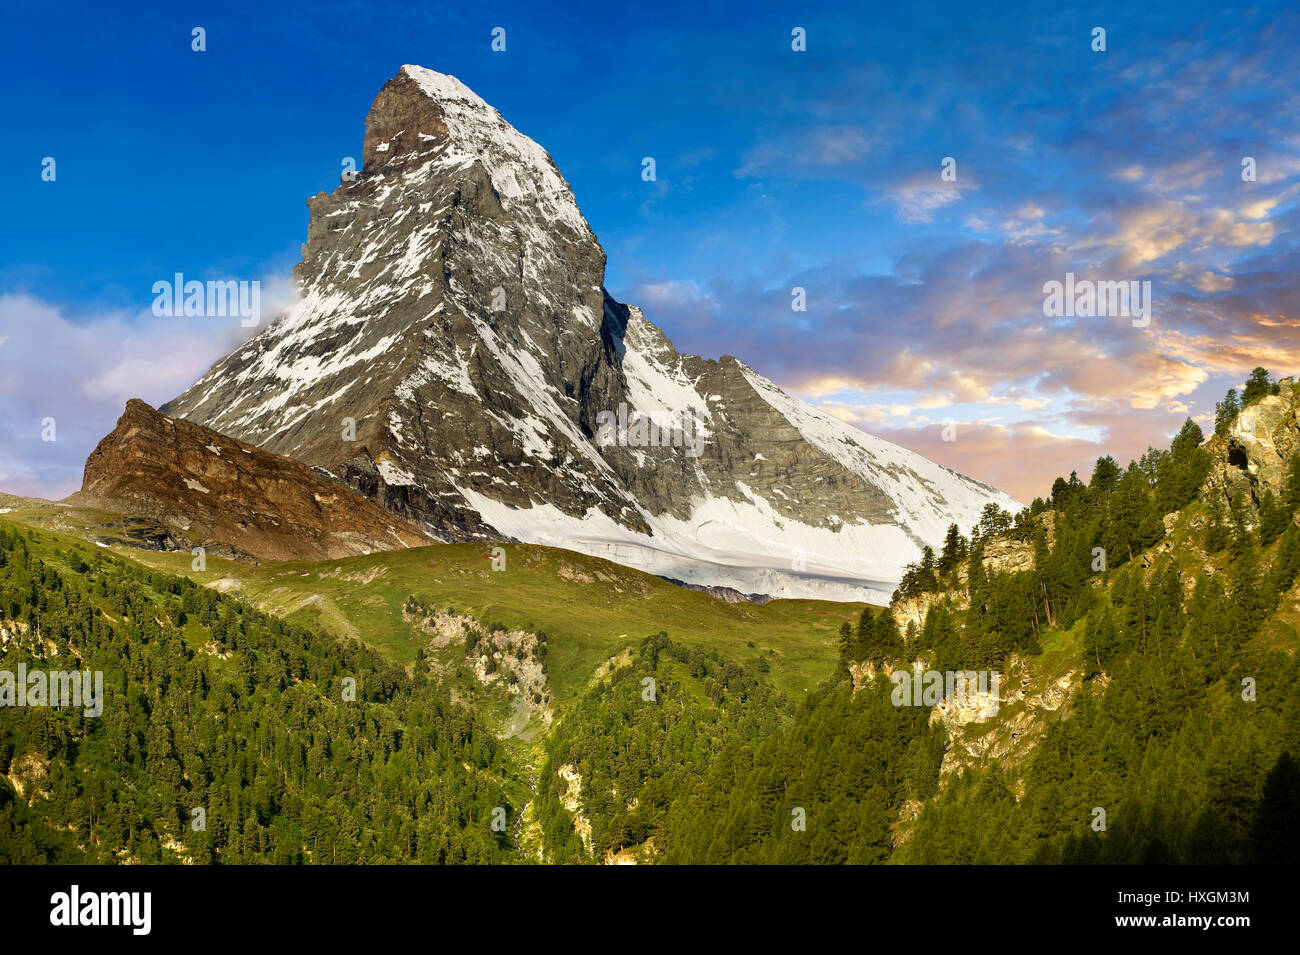 The Matterhorn or Monte Cervino mountain peak, Zermatt, Switzerland Stock Photo